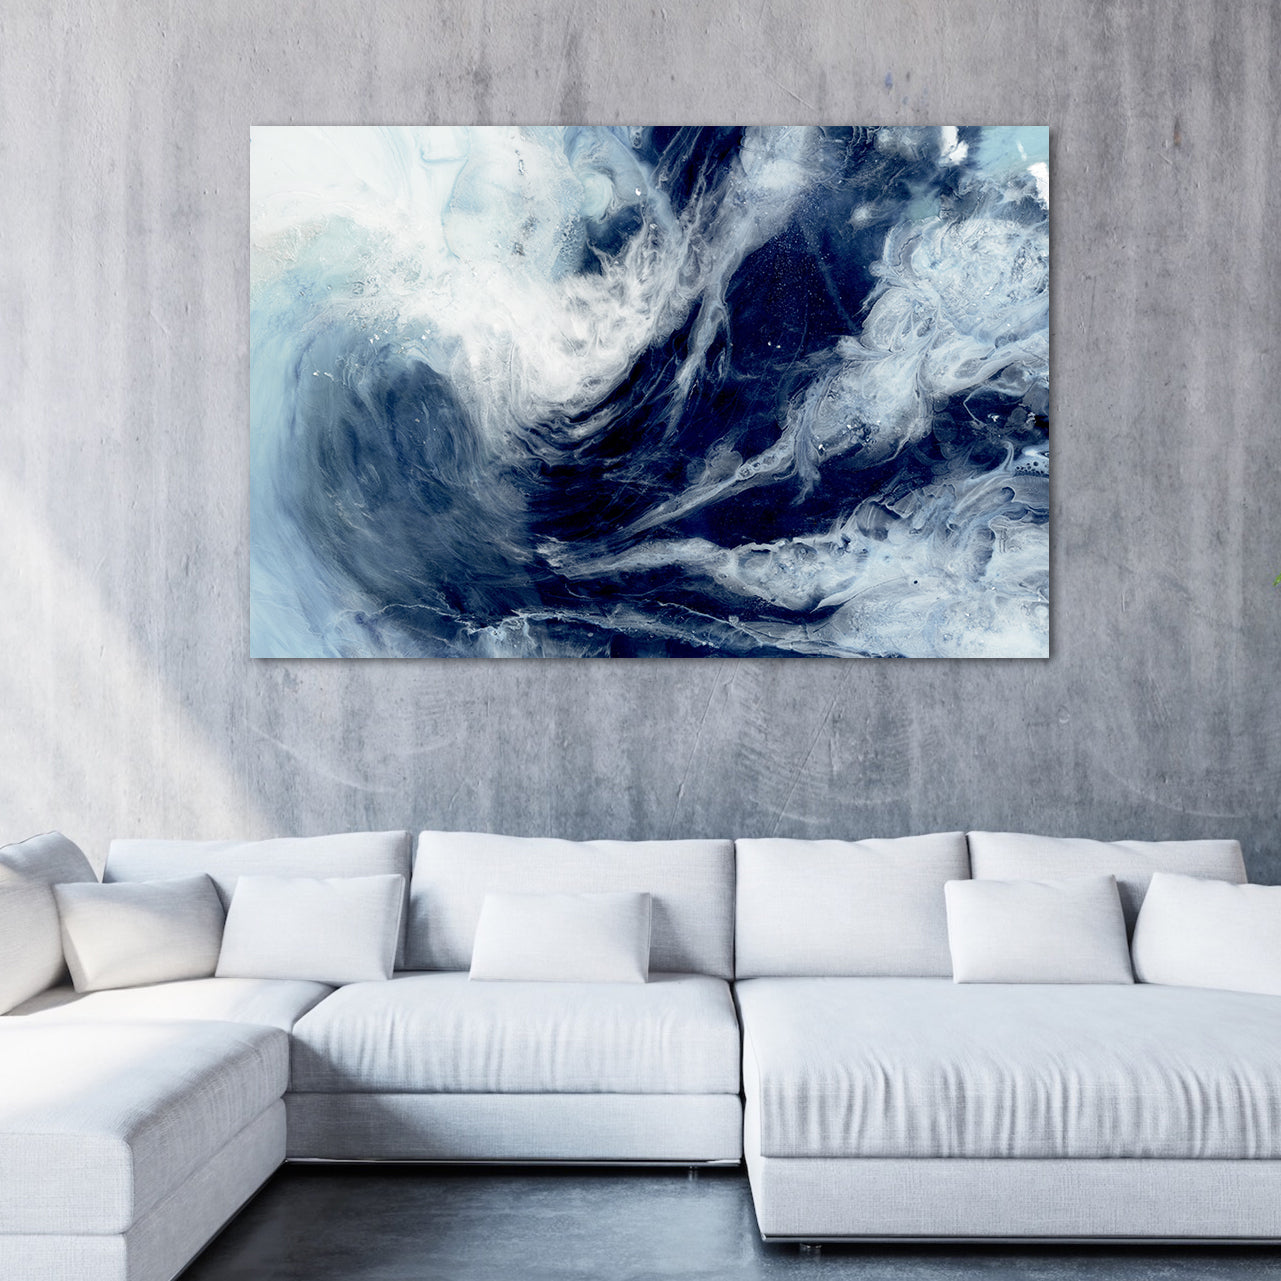 Abstract Sea. Black and White. Boro 5 Tornado. Art Print. Antuanelle Boracay Dreams Limited Edition Print